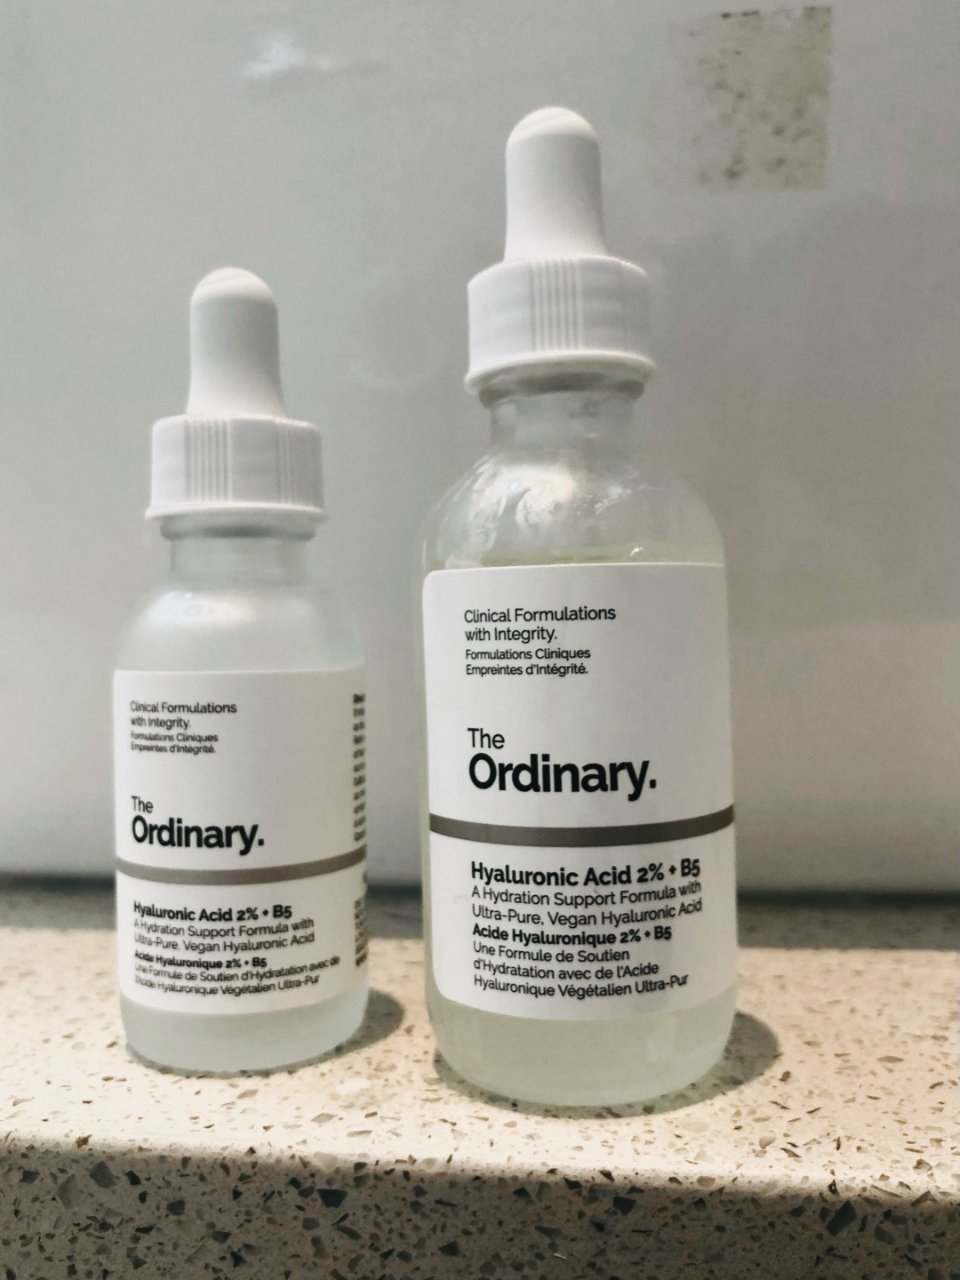 The ordinary,Hyaluronic Acid 2% + B5 Hydrating Serum - The Ordinary | Sephora